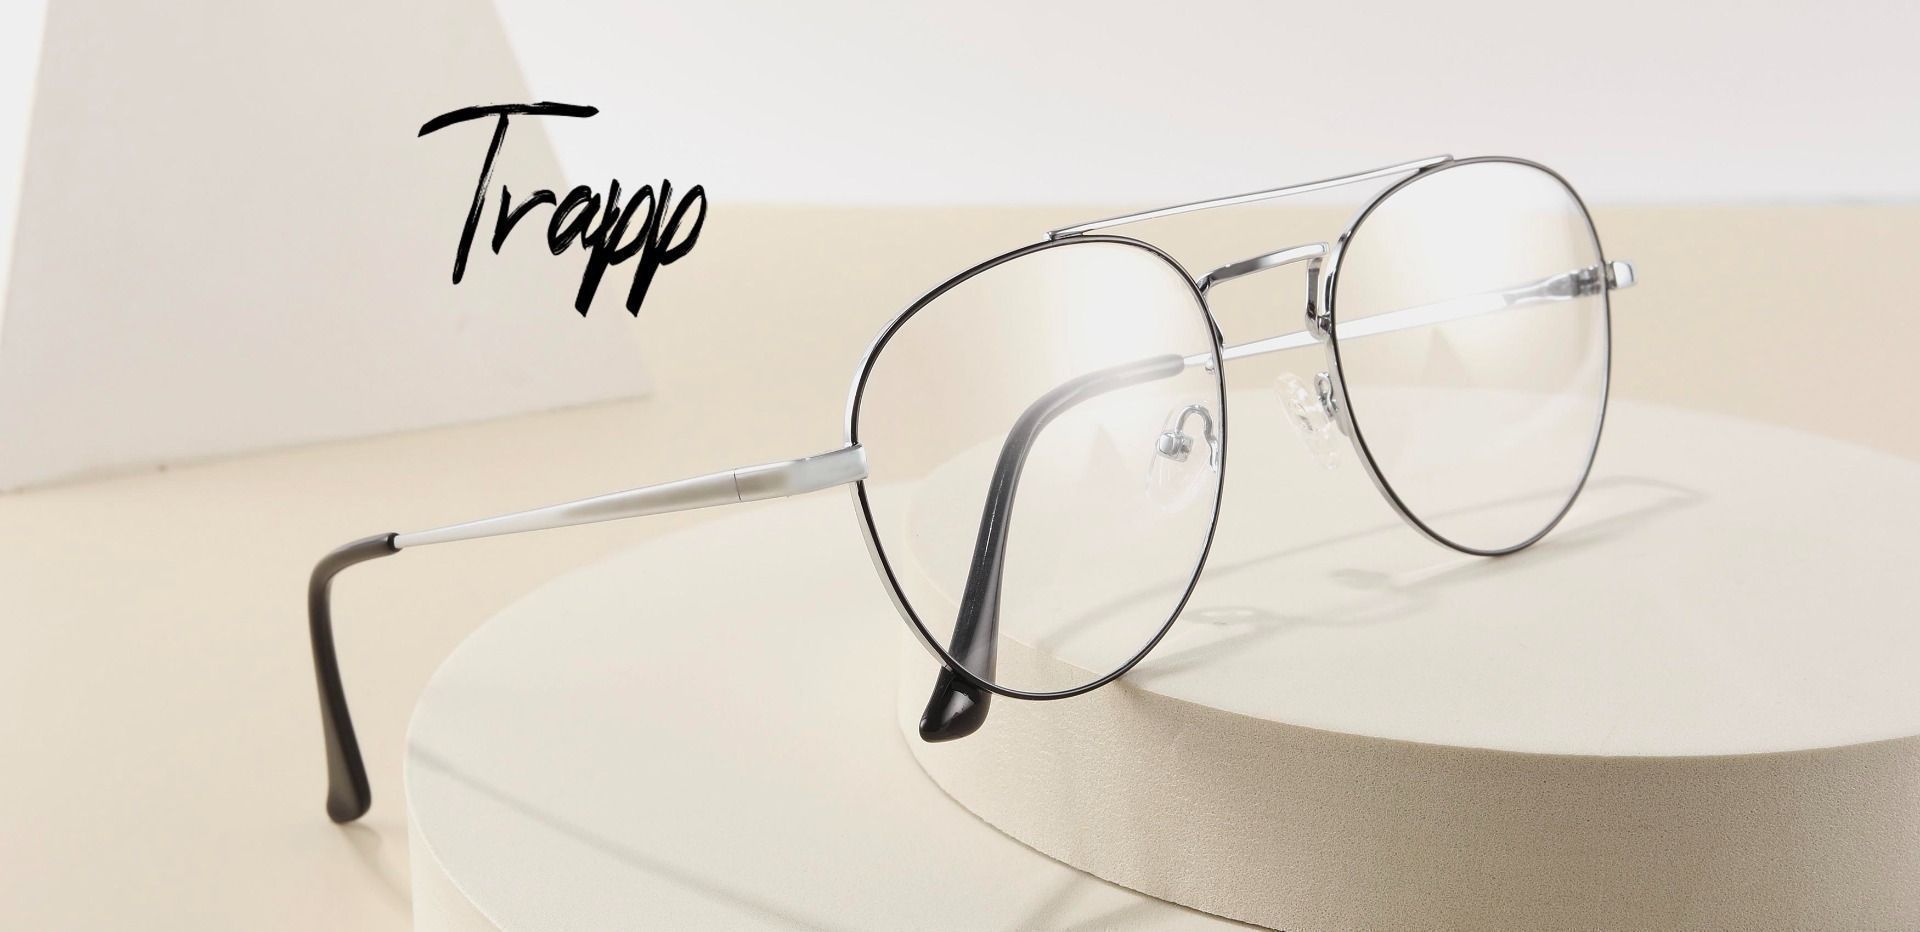 Trapp Aviator Reading Glasses - Gray